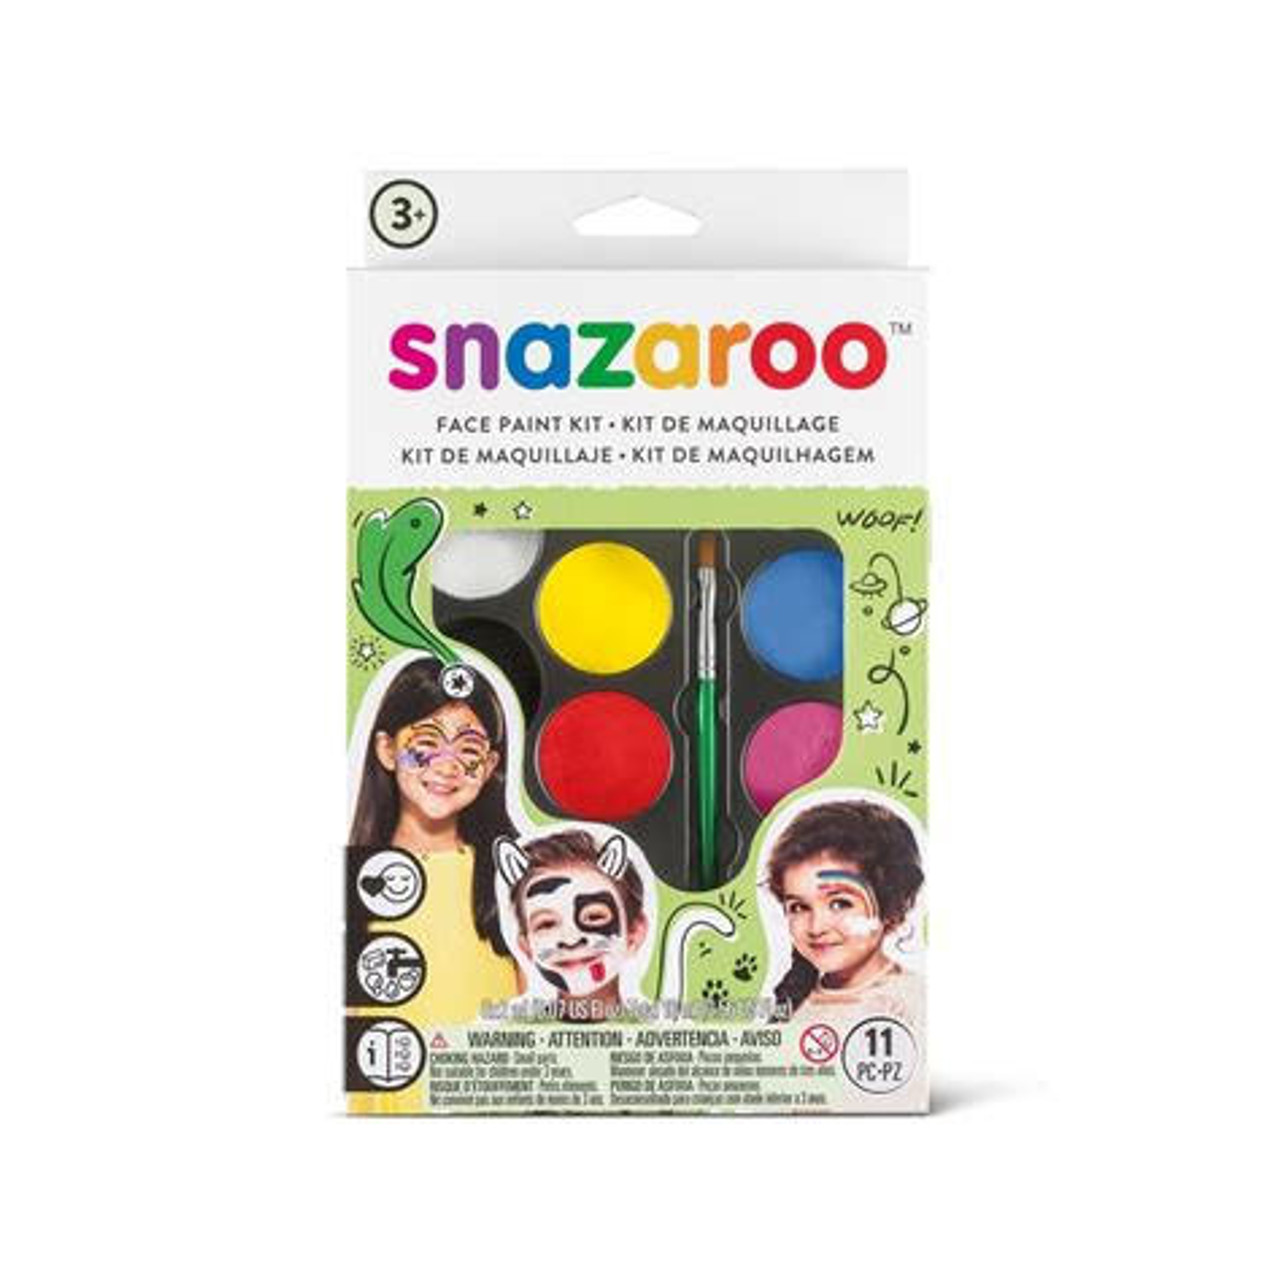 Snazaroo Face Paint, Black - FLAX art & design